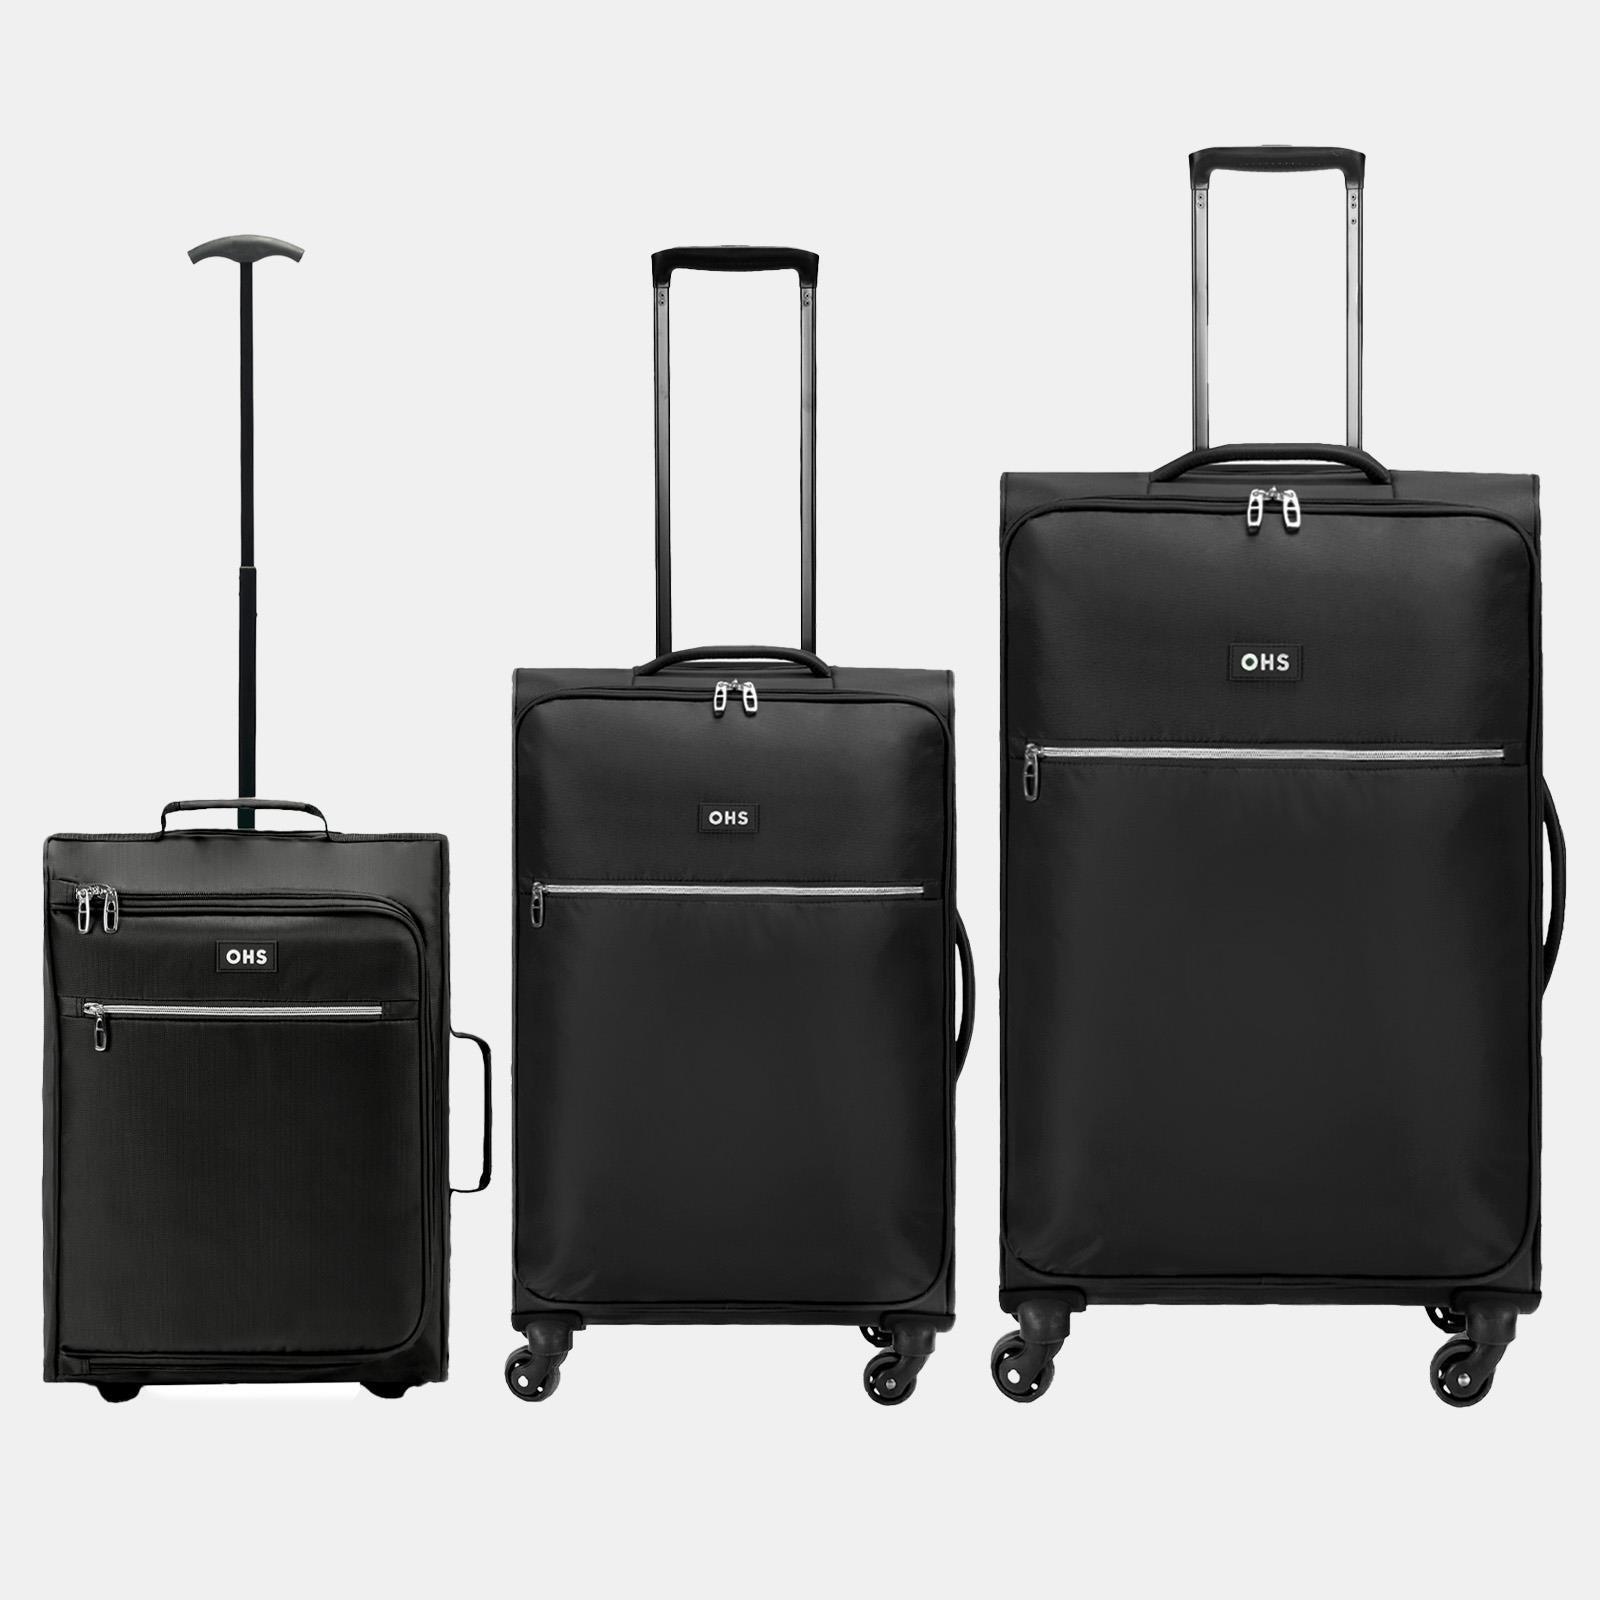 3 Piece Set Of Suitcase Luggage Soft Shell Travel Case Bag